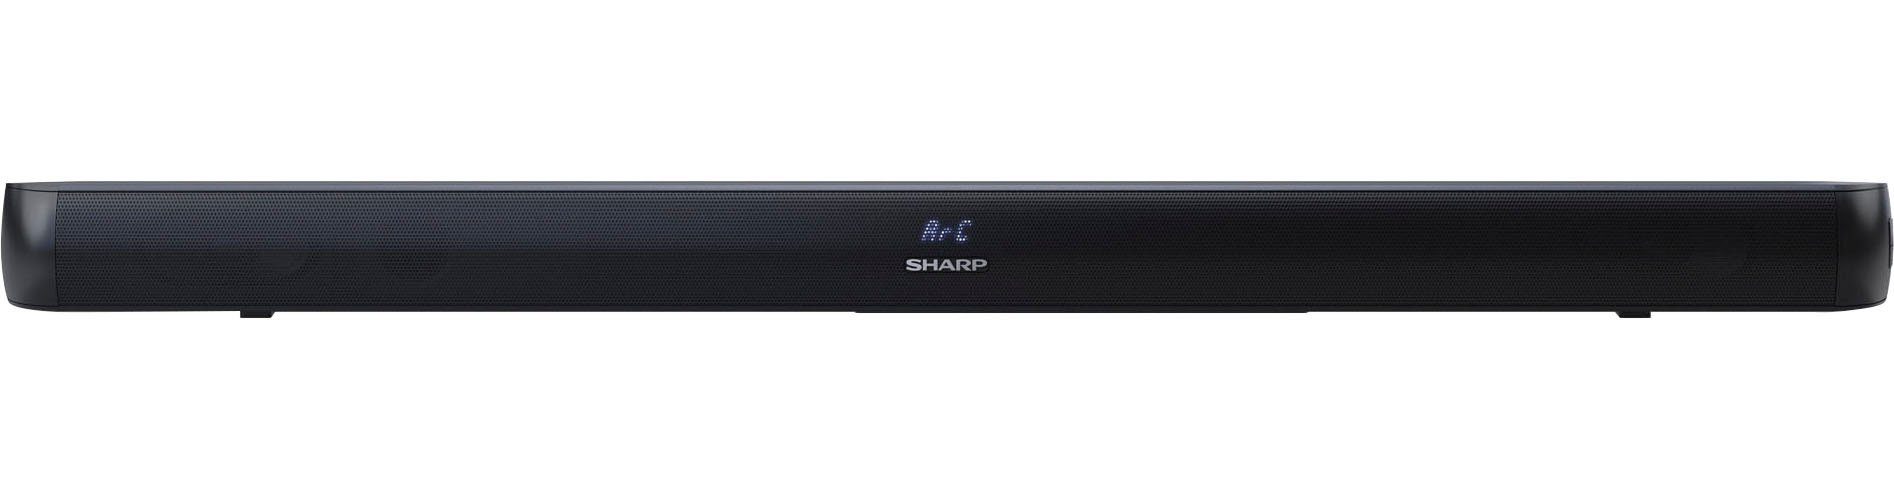 Sharp (Bluetooth) Stereo Soundbar HT-SB147